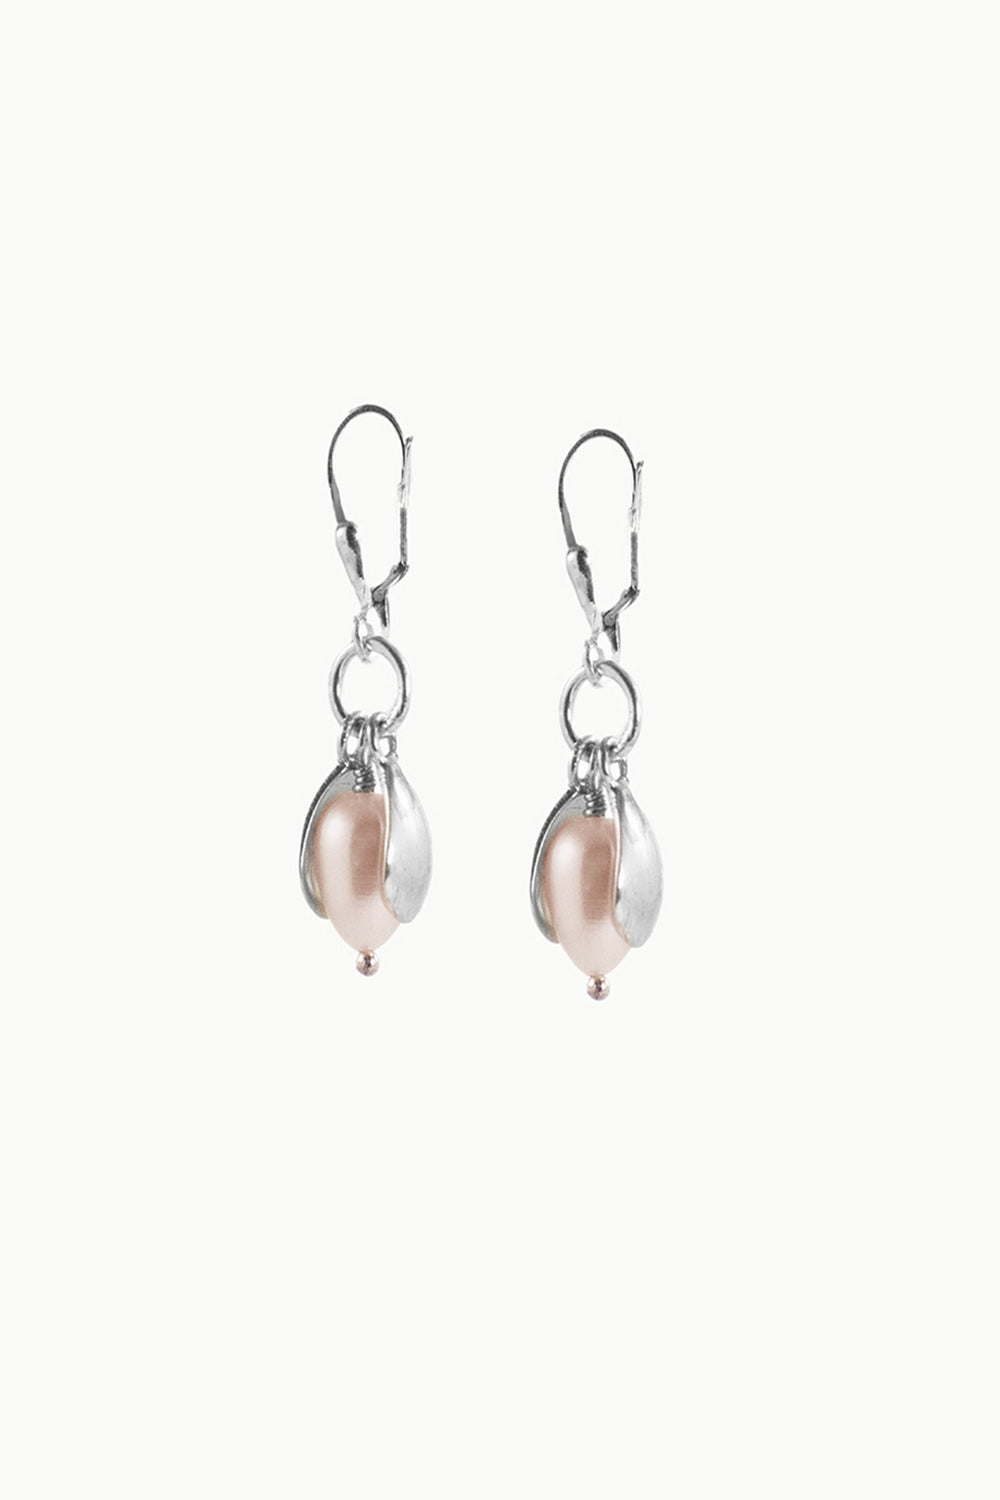 Petite Blossom Bell Earrings Sterling Silver - Peach